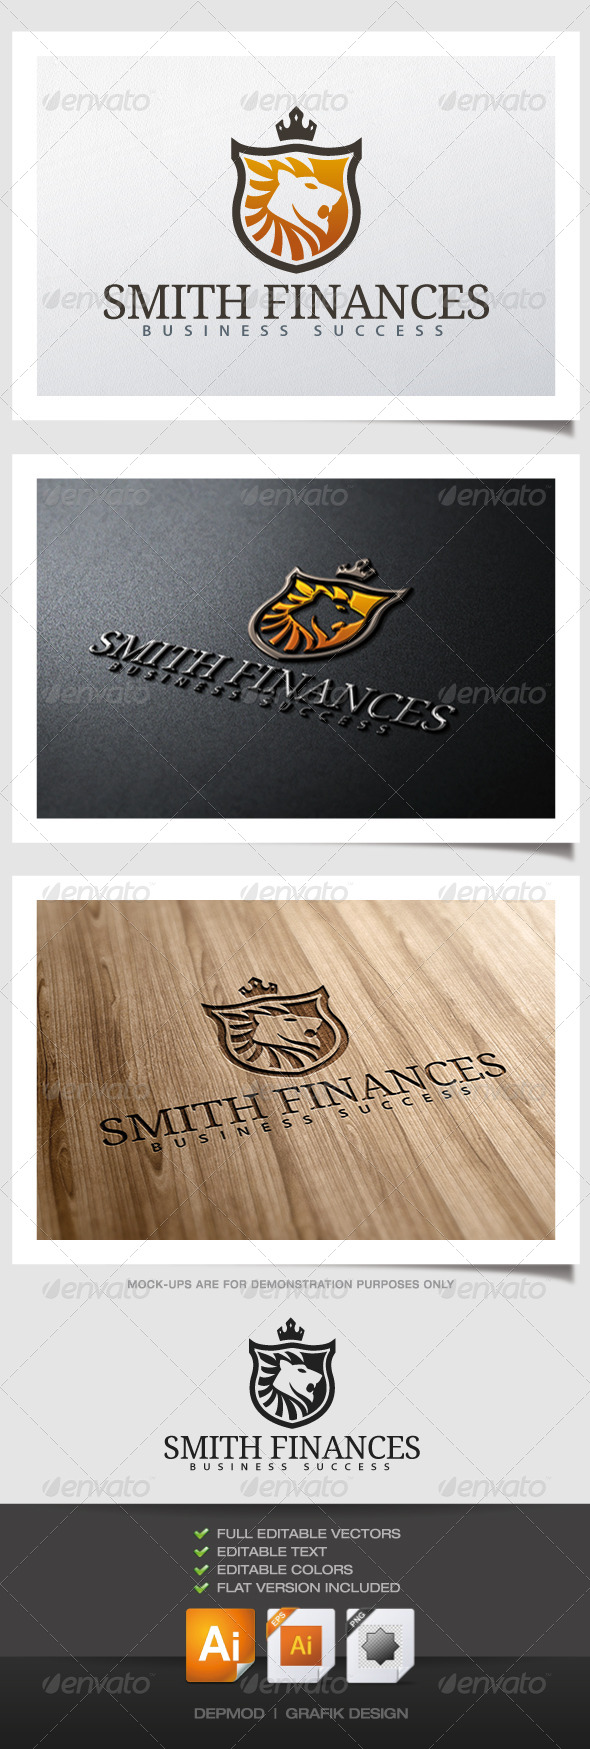 Smith Finances Logo